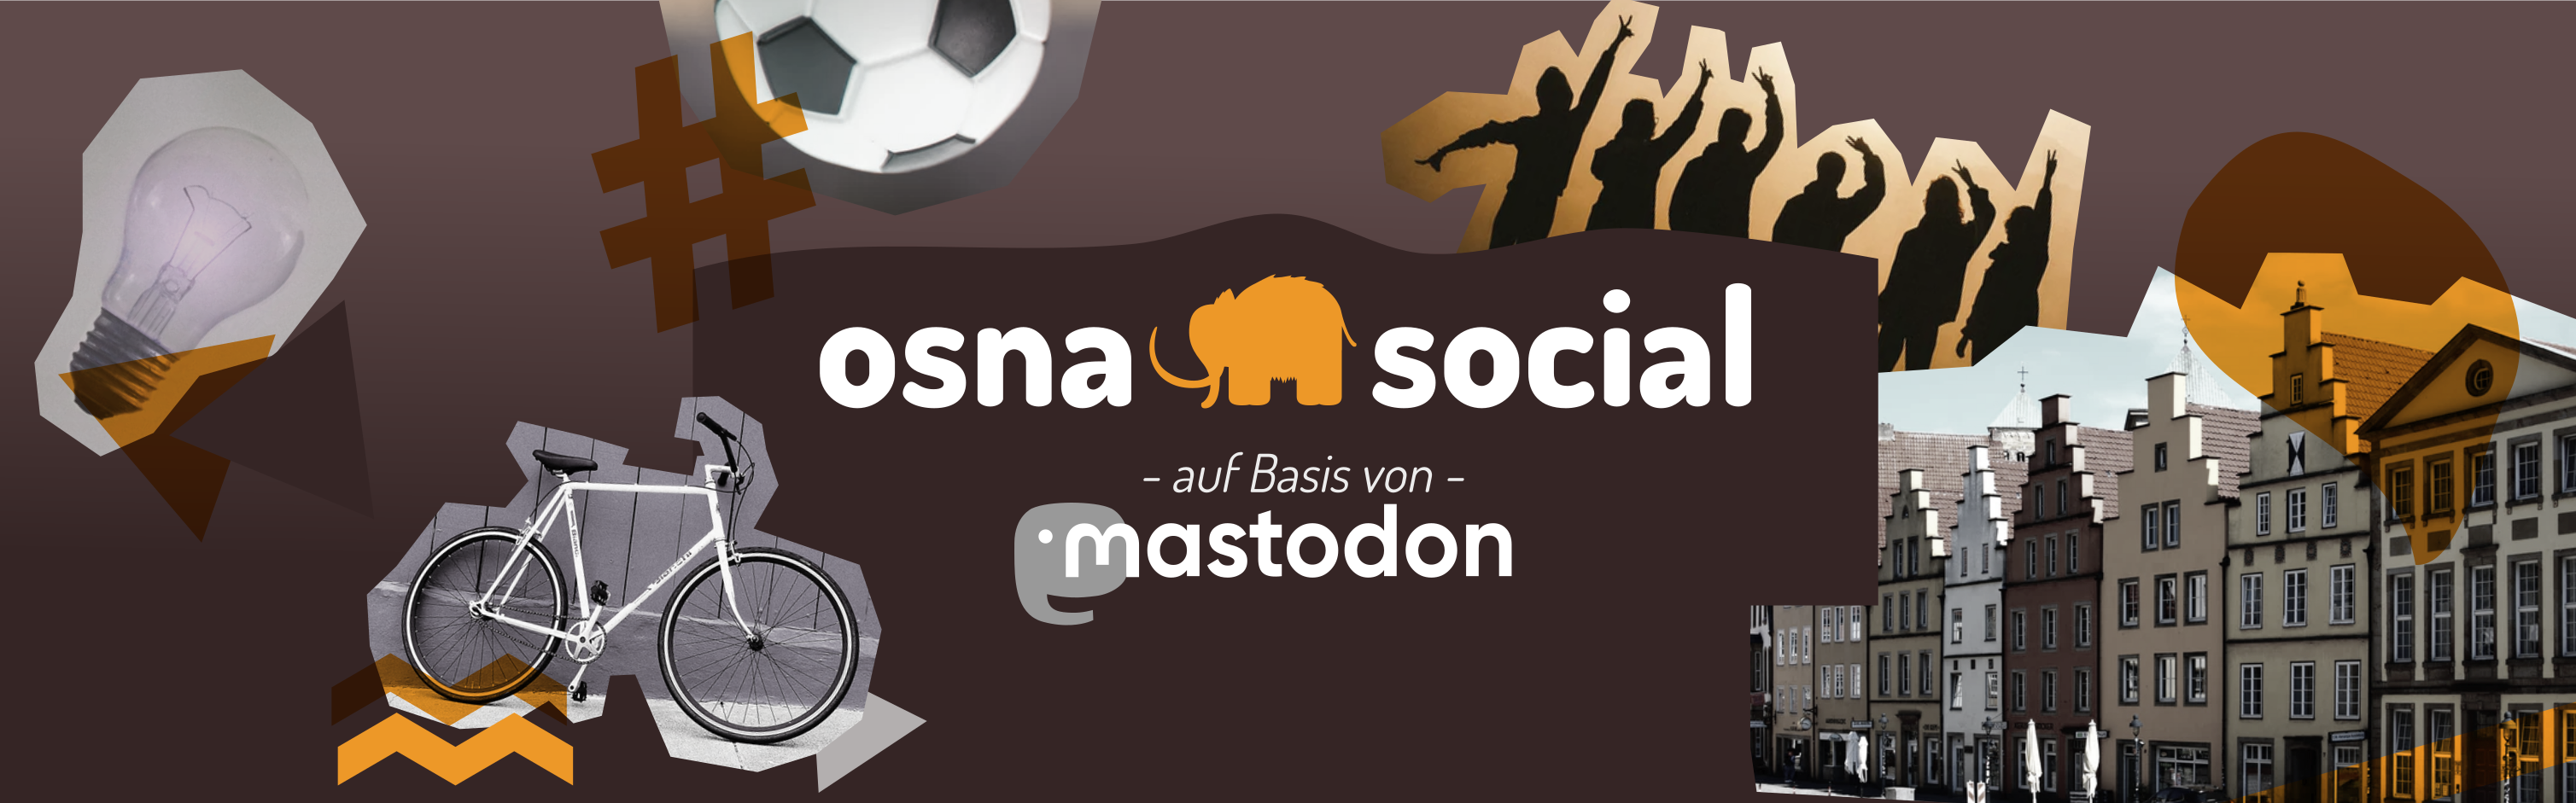 Mastodon für Osnabrück